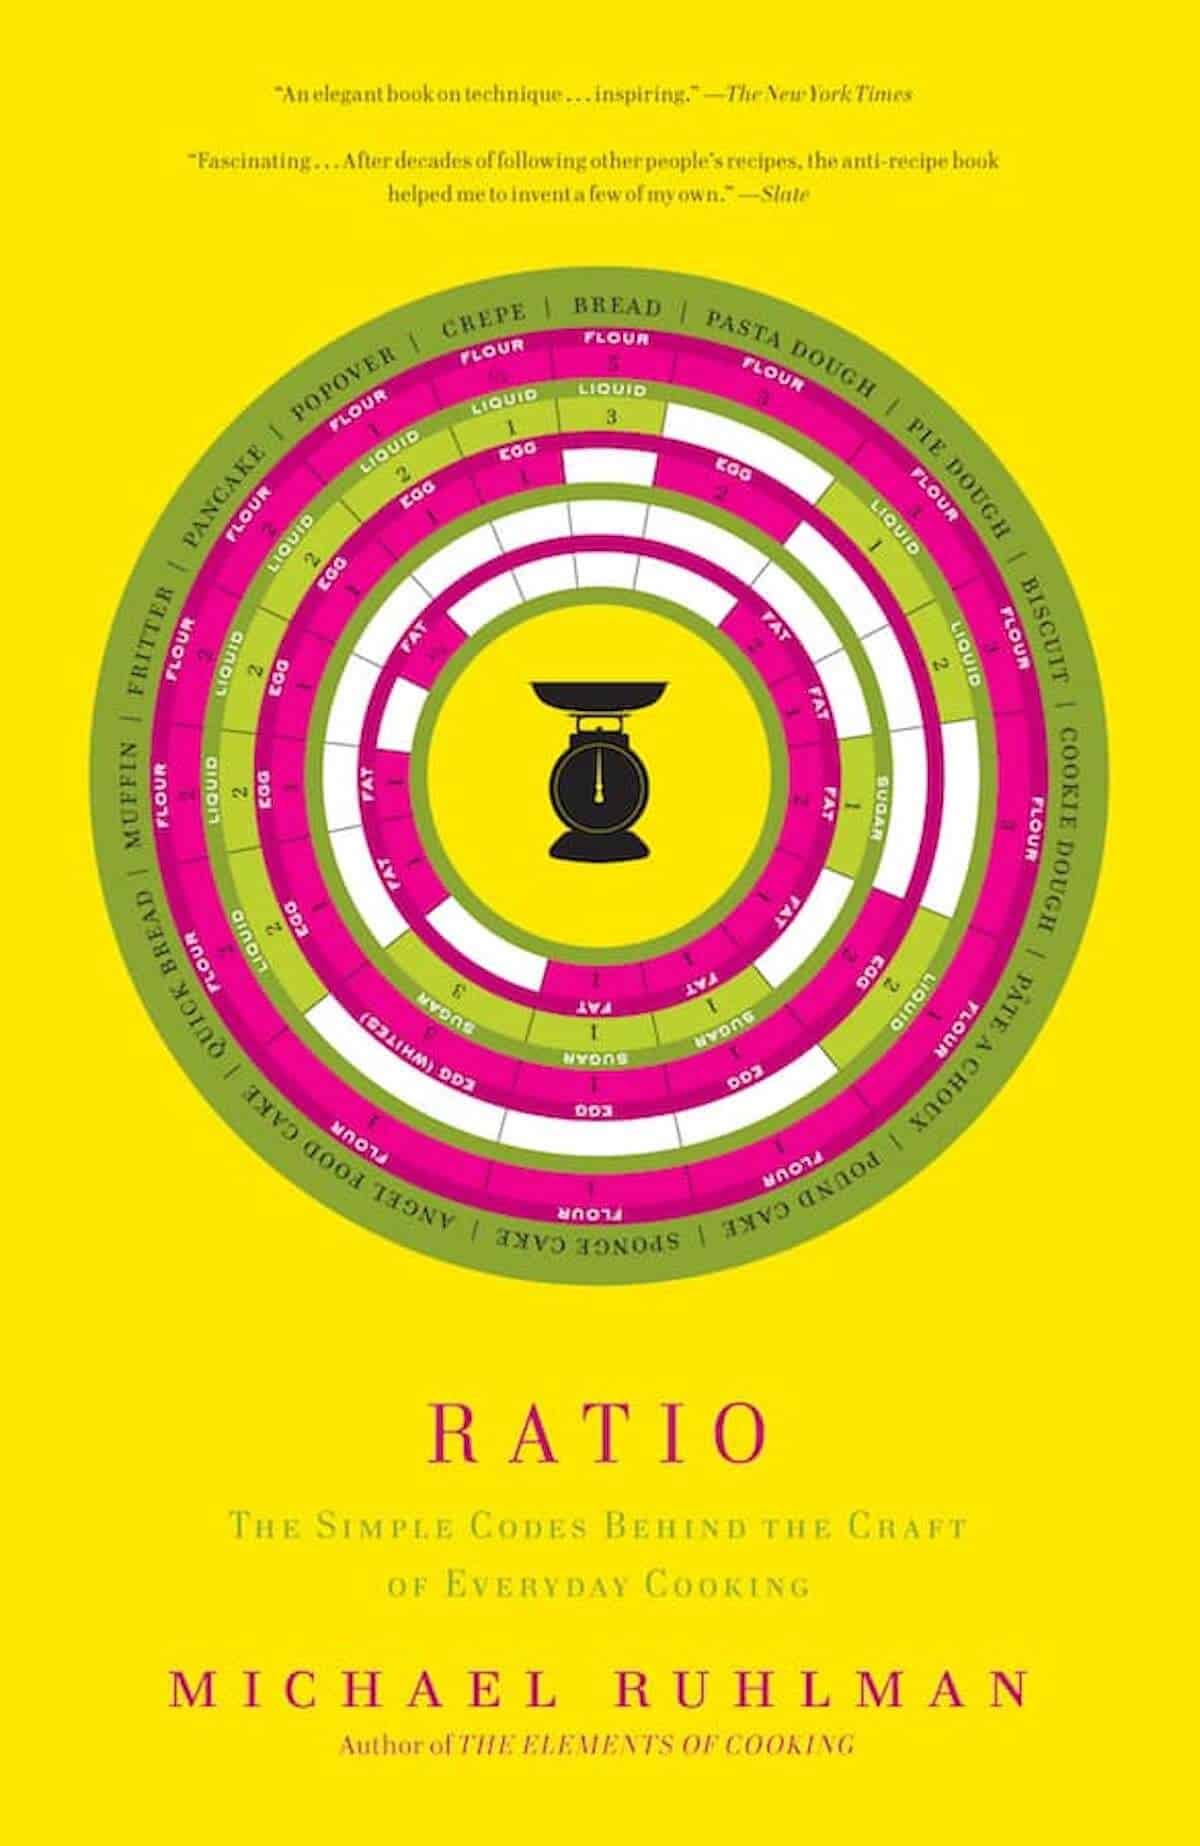 Michael Ruhlman Ratio cookbook cover